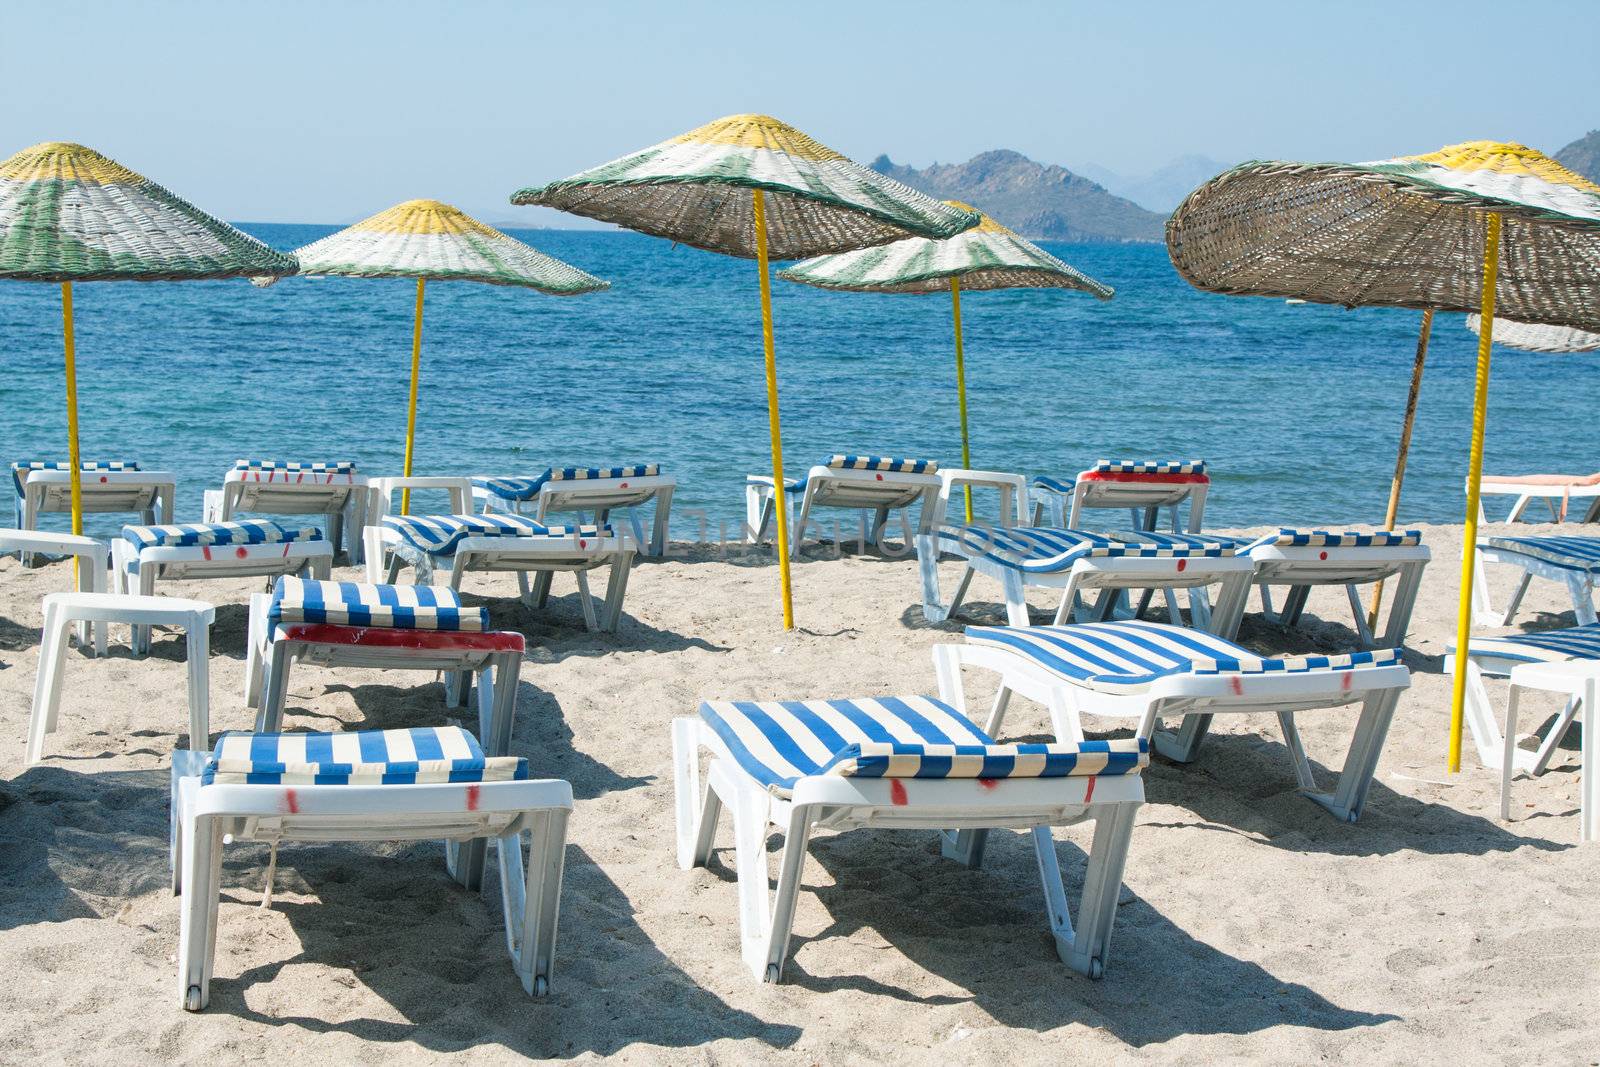 Sun loungers and wicker parasols on sandy beach in Turgutreis in the Bodrum Peninsula, Turkey.